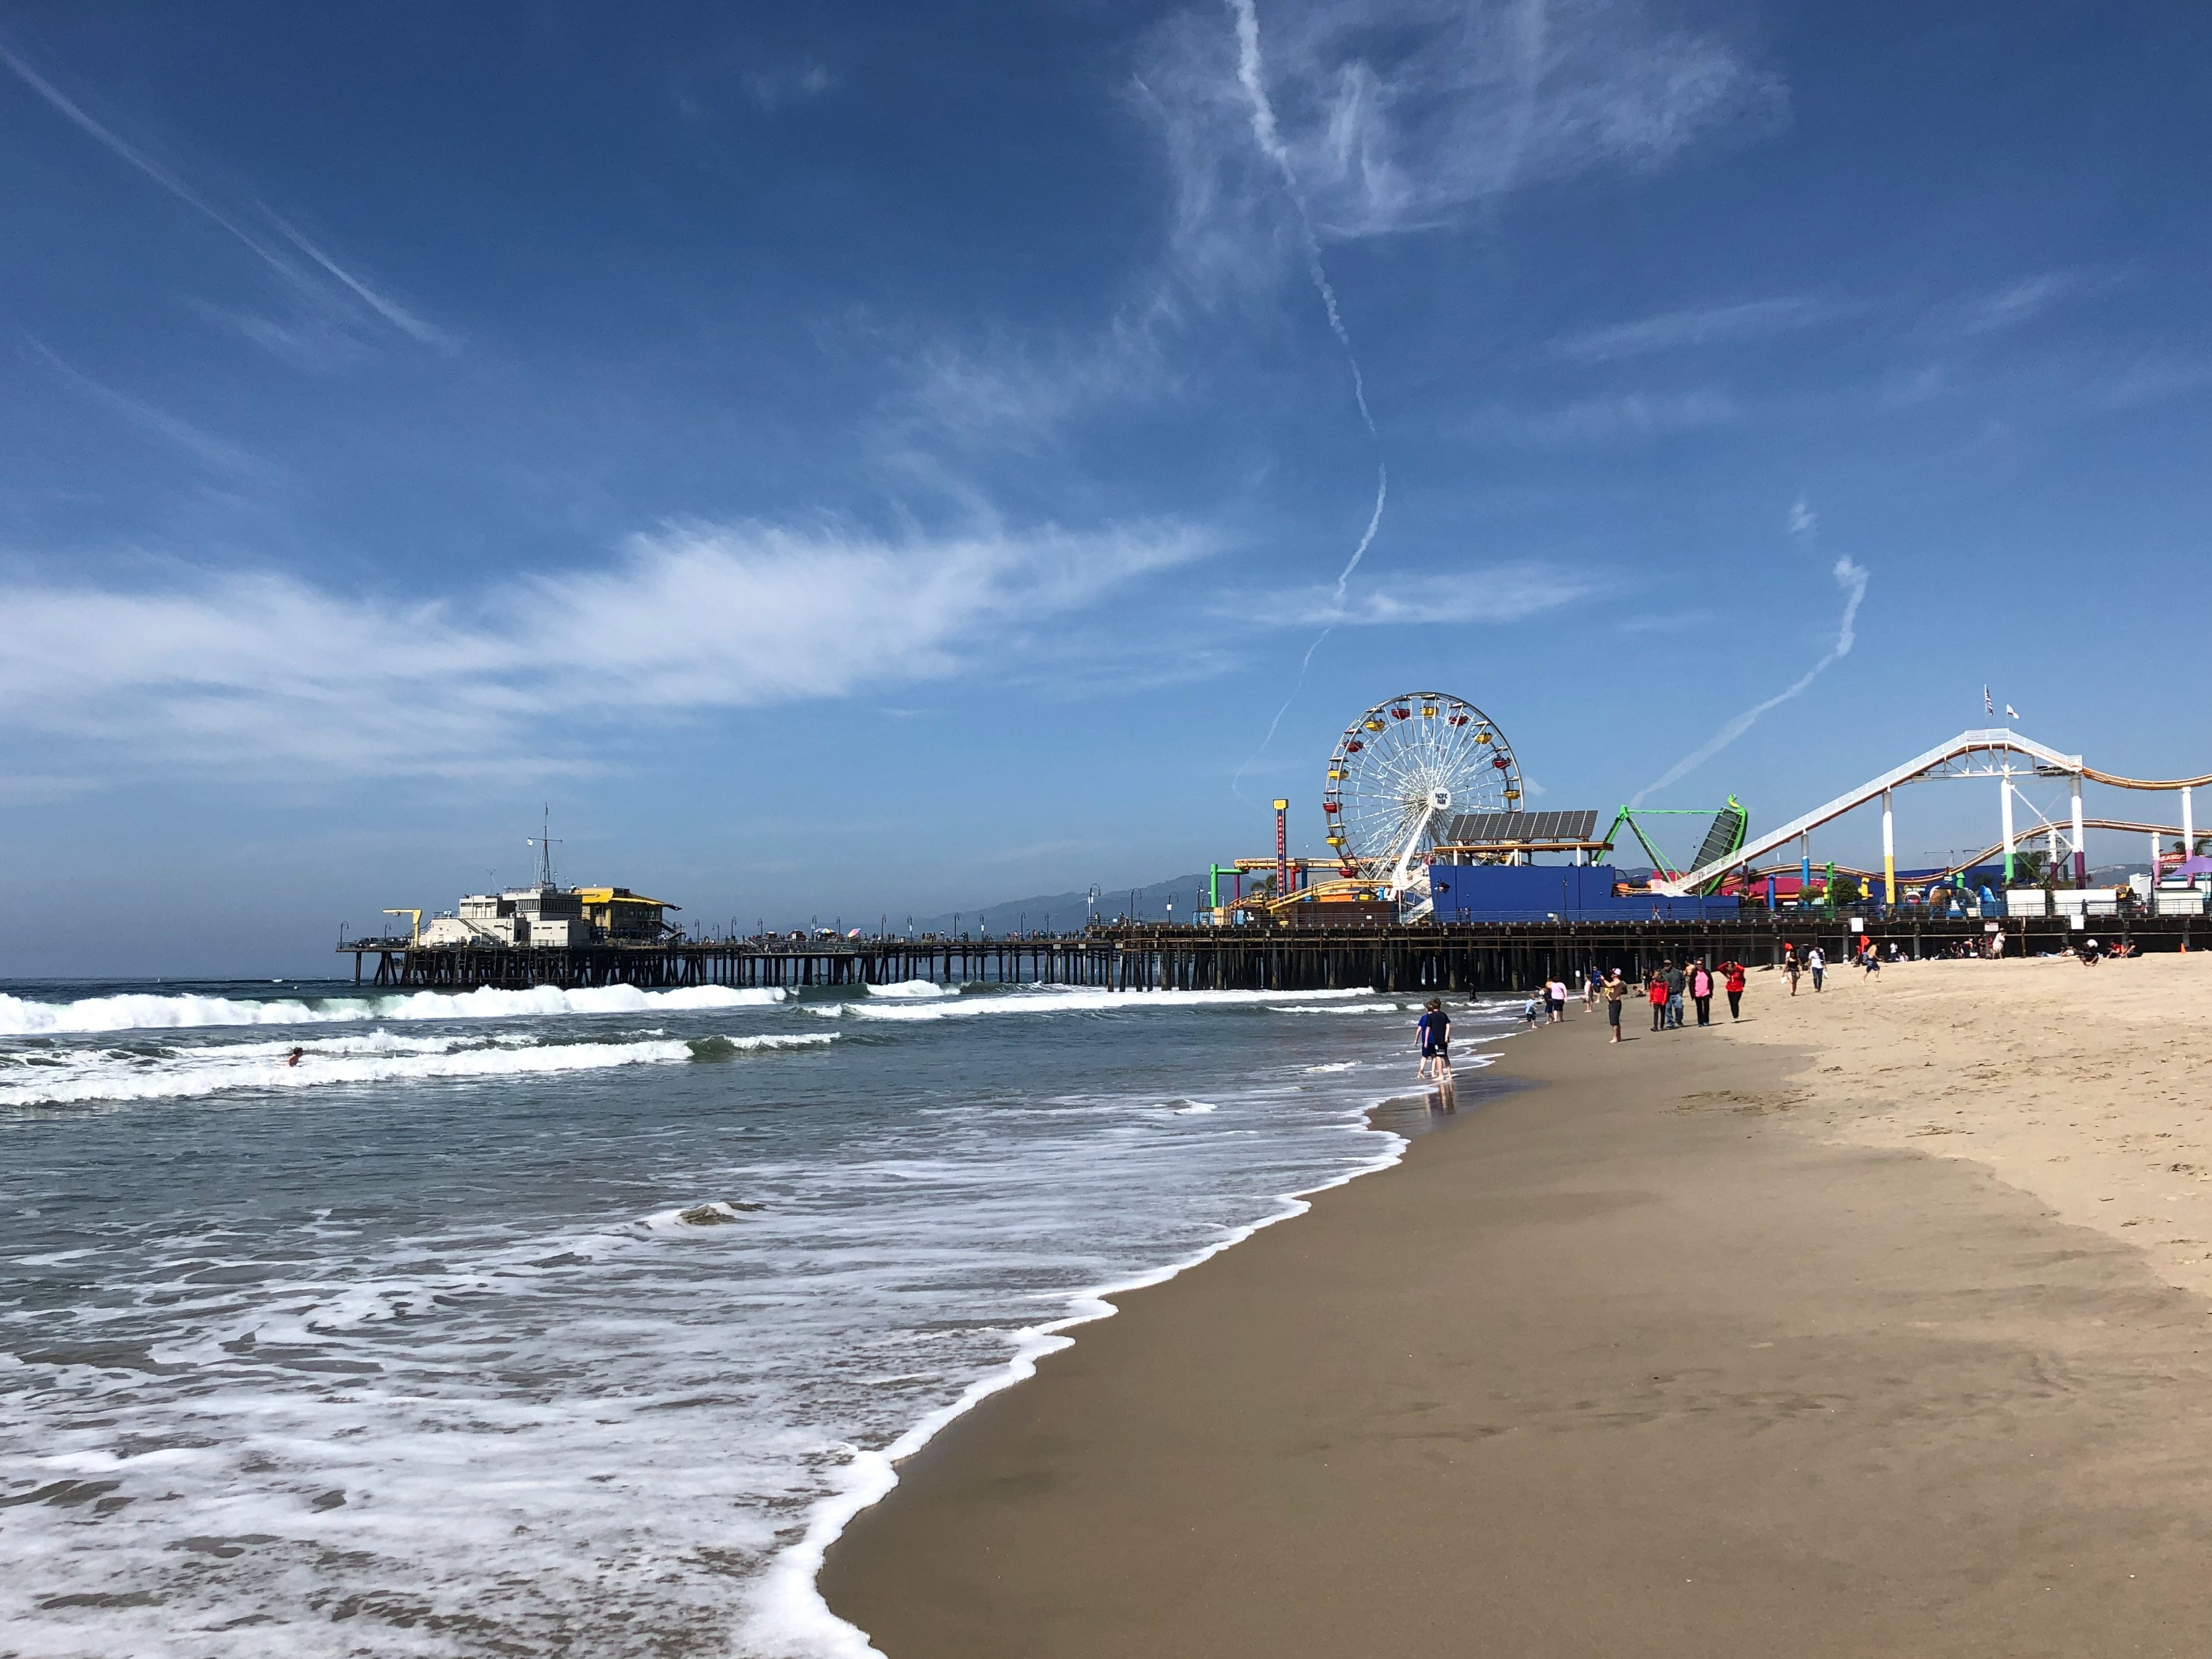 View of the Santa Monica Pier